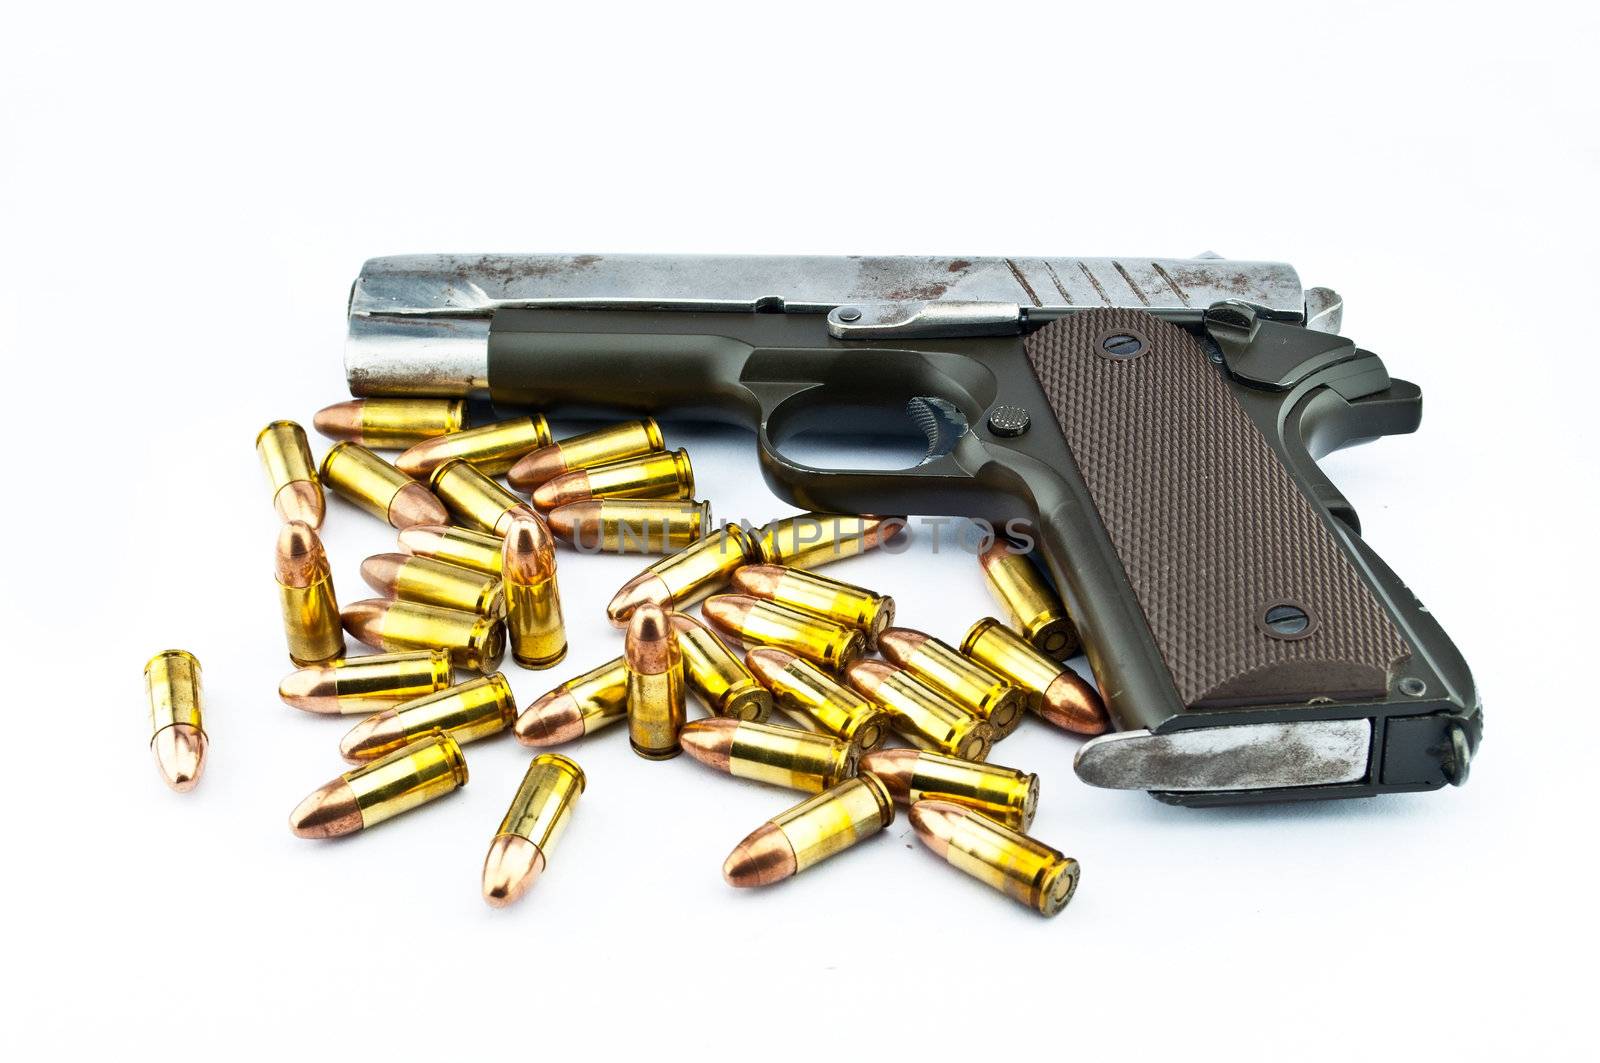 9-mm handgun and target shooting